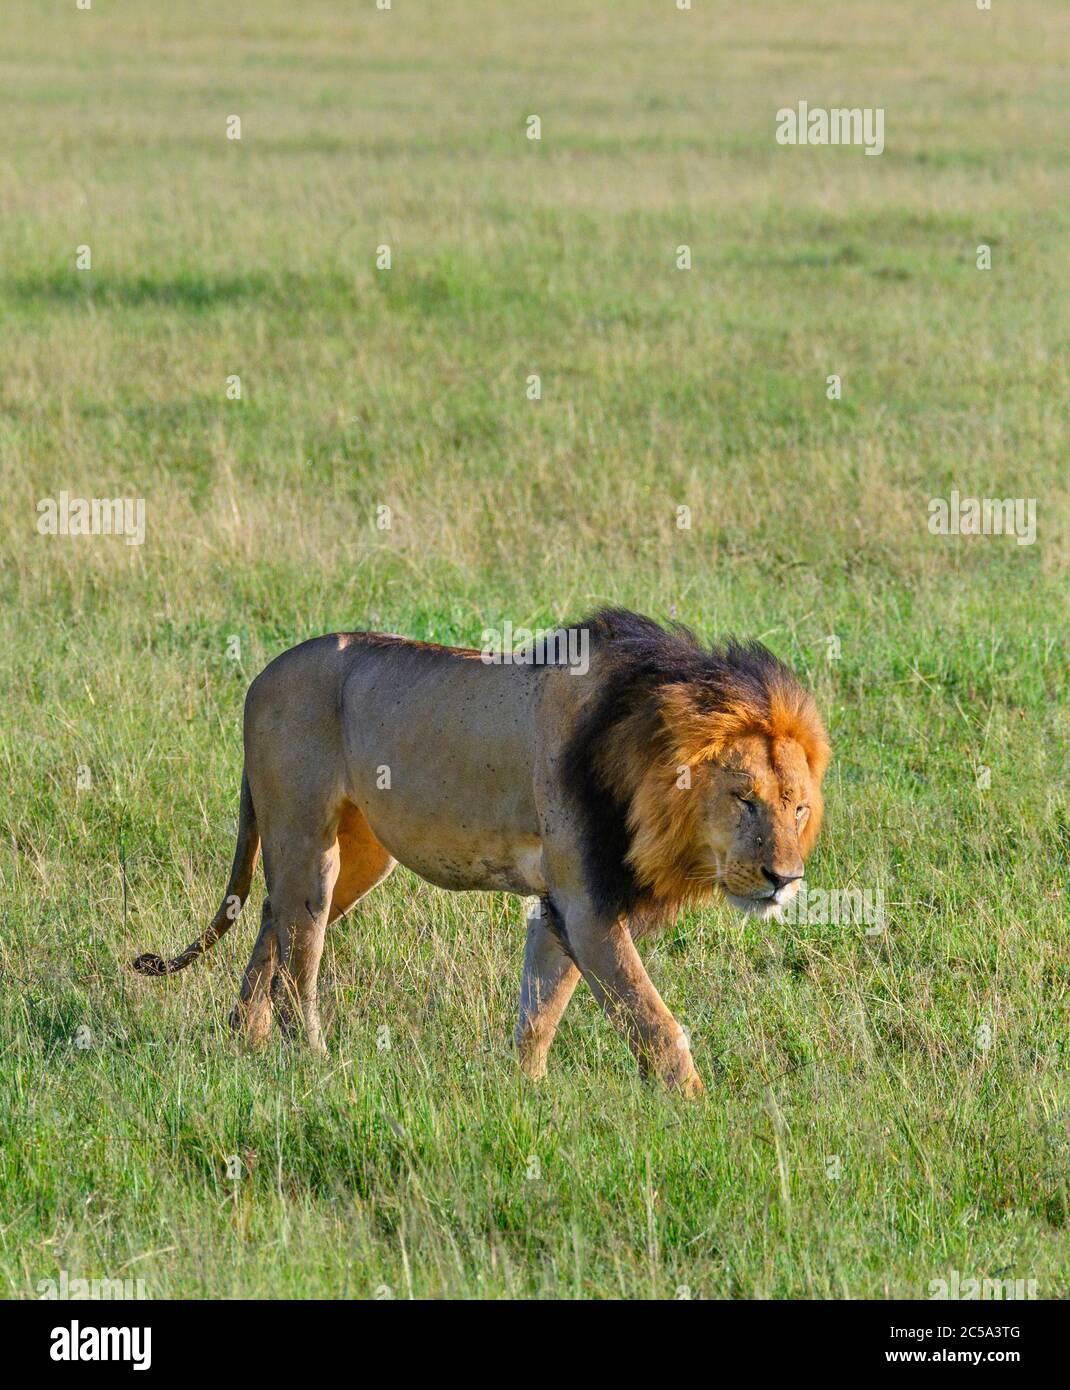 Lion (Panthera leo). Lion walking across open grassland, Masai Mara National Reserve, Kenya, Africa Stock Photo